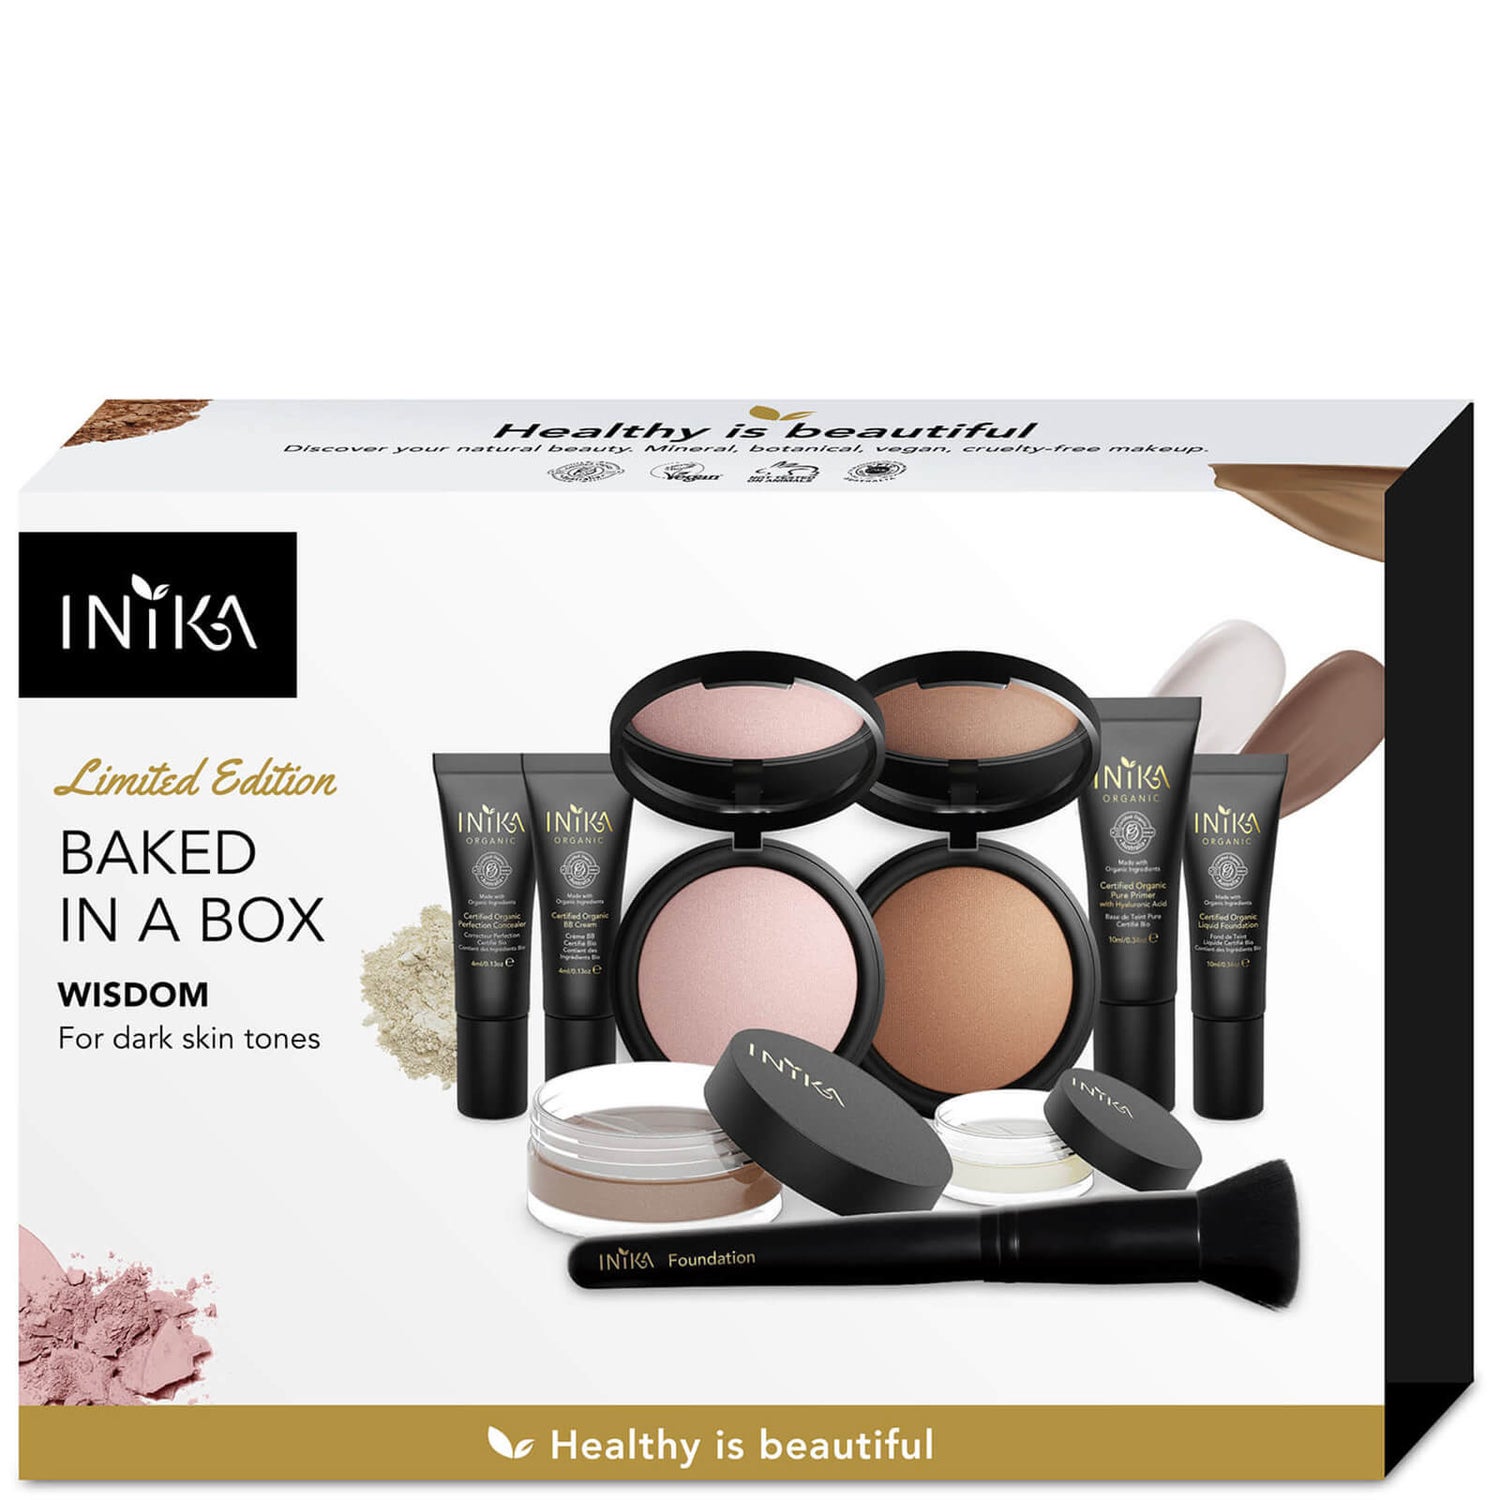 INIKA Baked in a Box - Wisdom (Worth $190.00)